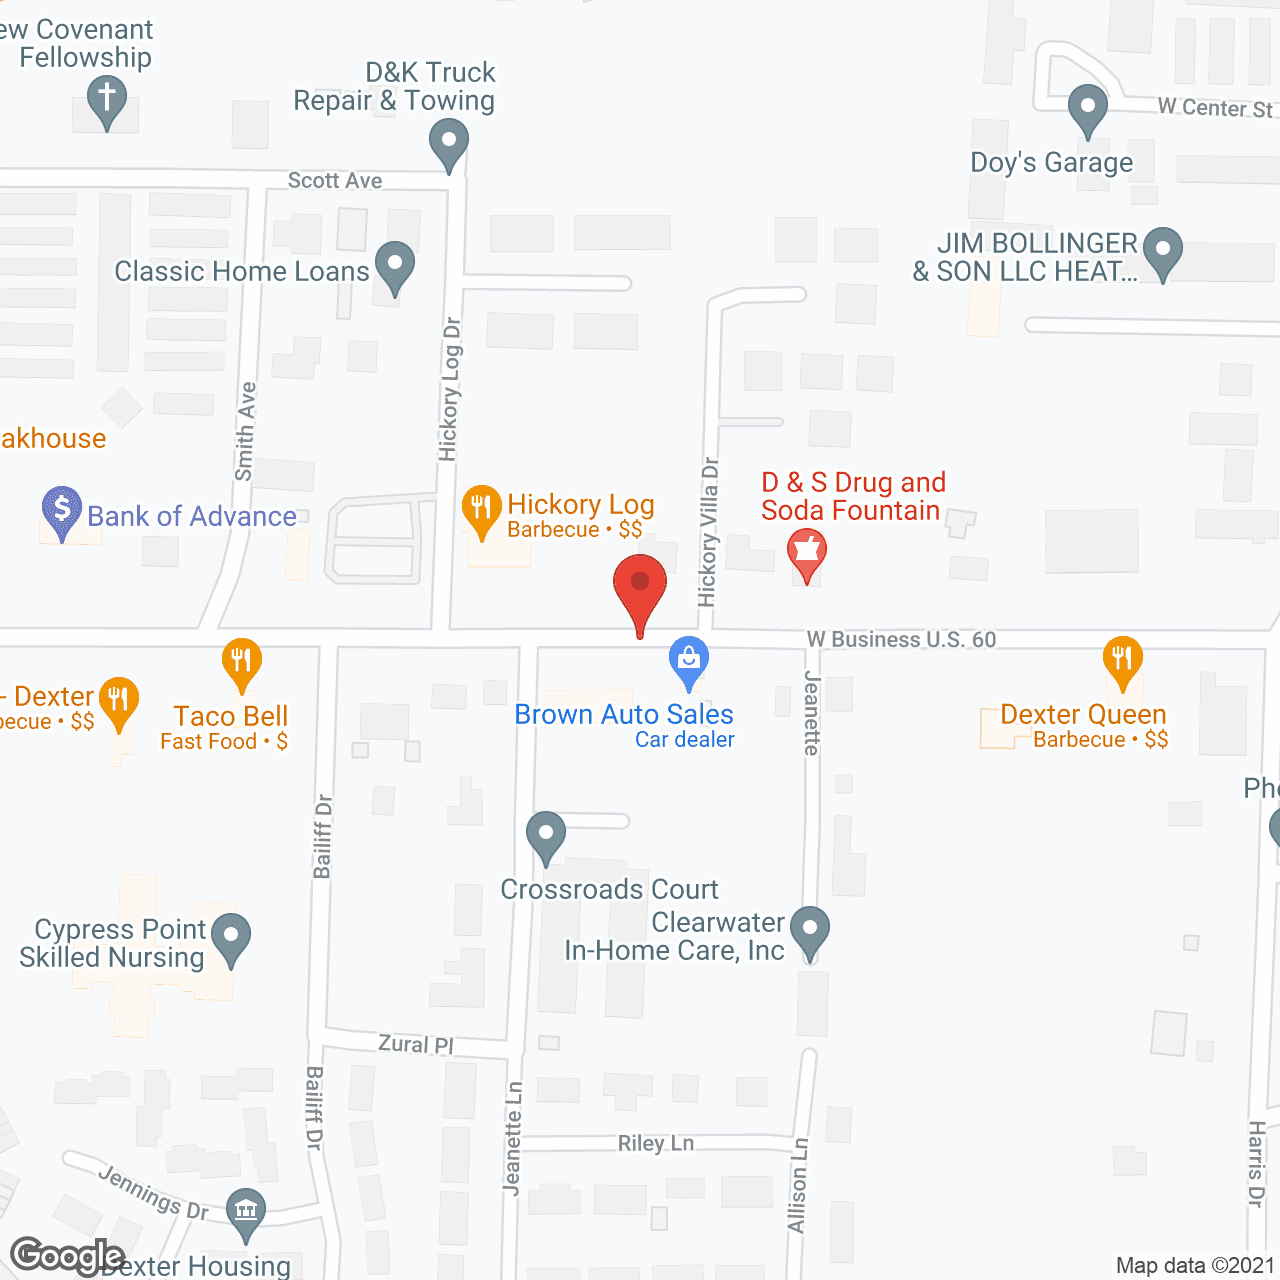 Crossroads Court in google map